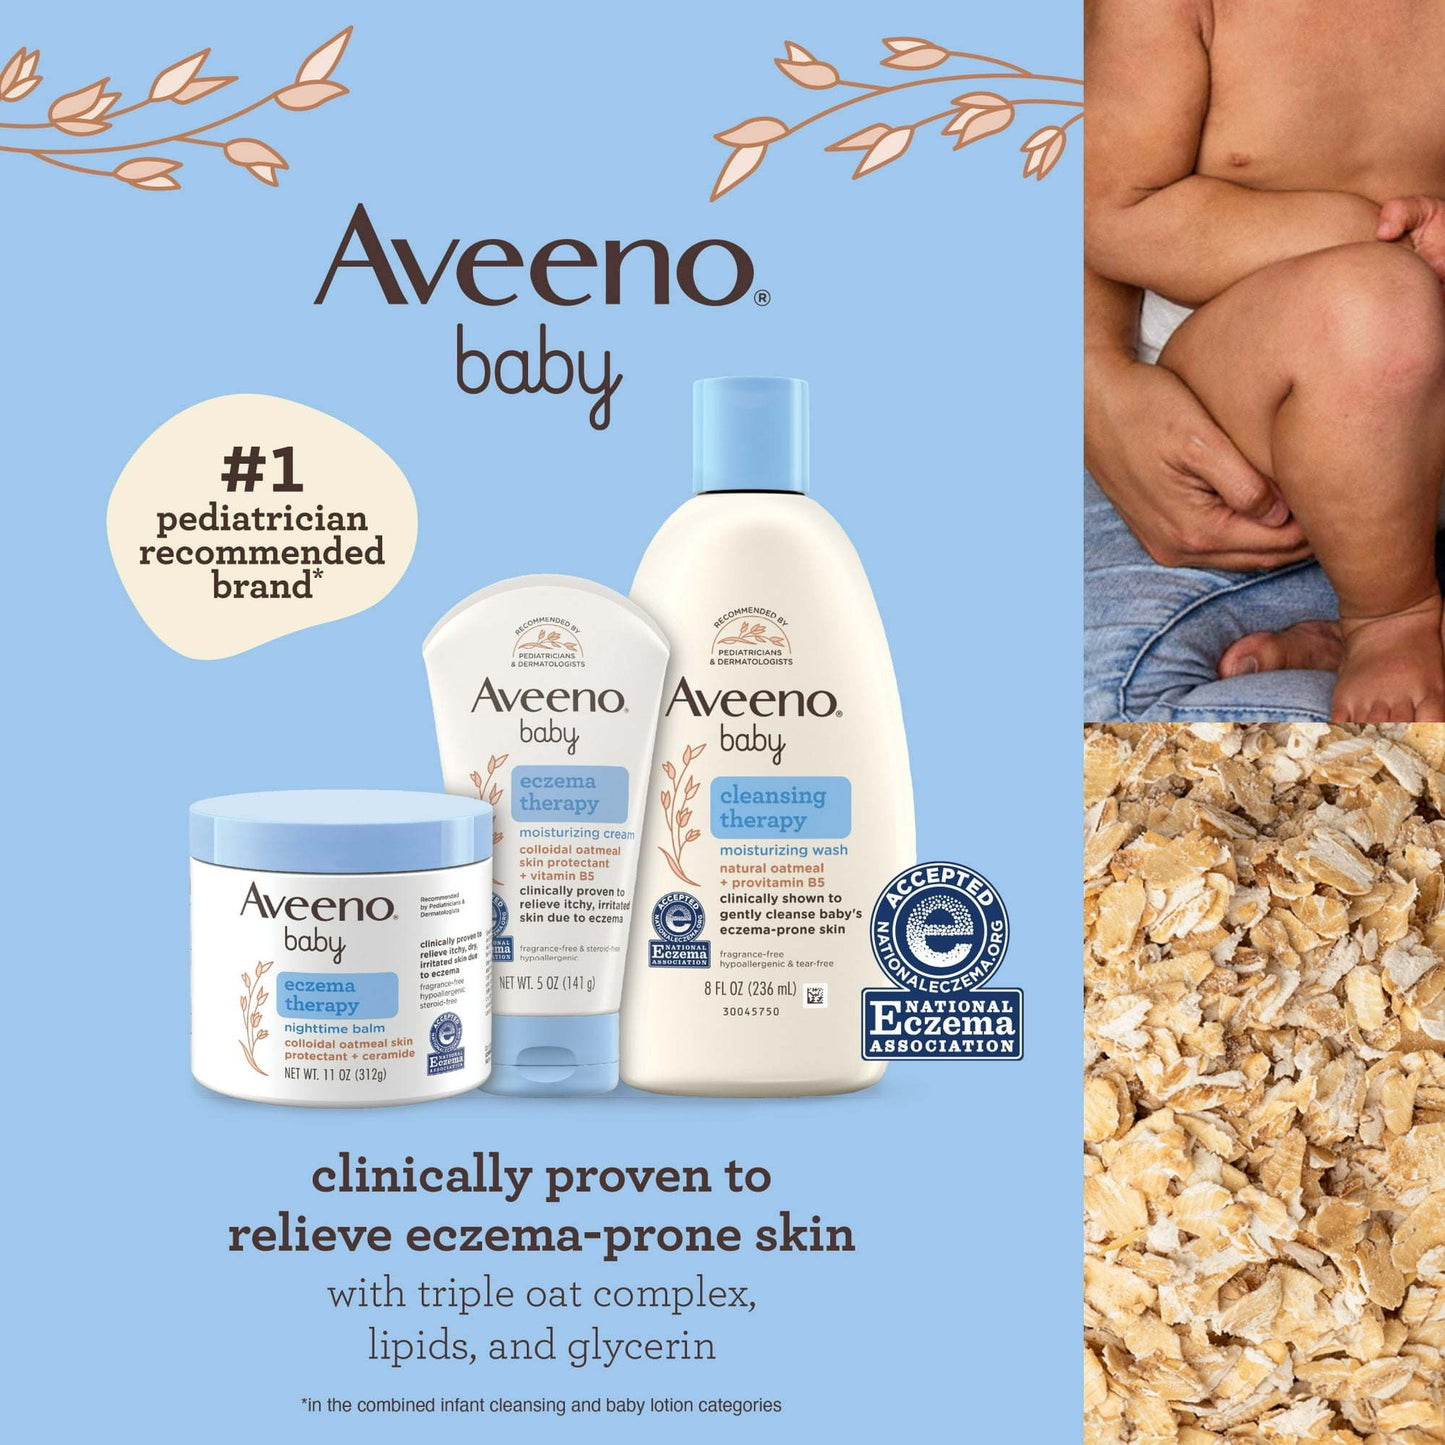 Aveeno Baby Eczema Therapy Nighttime Balm, Colloidal Oatmeal, 5.5 oz